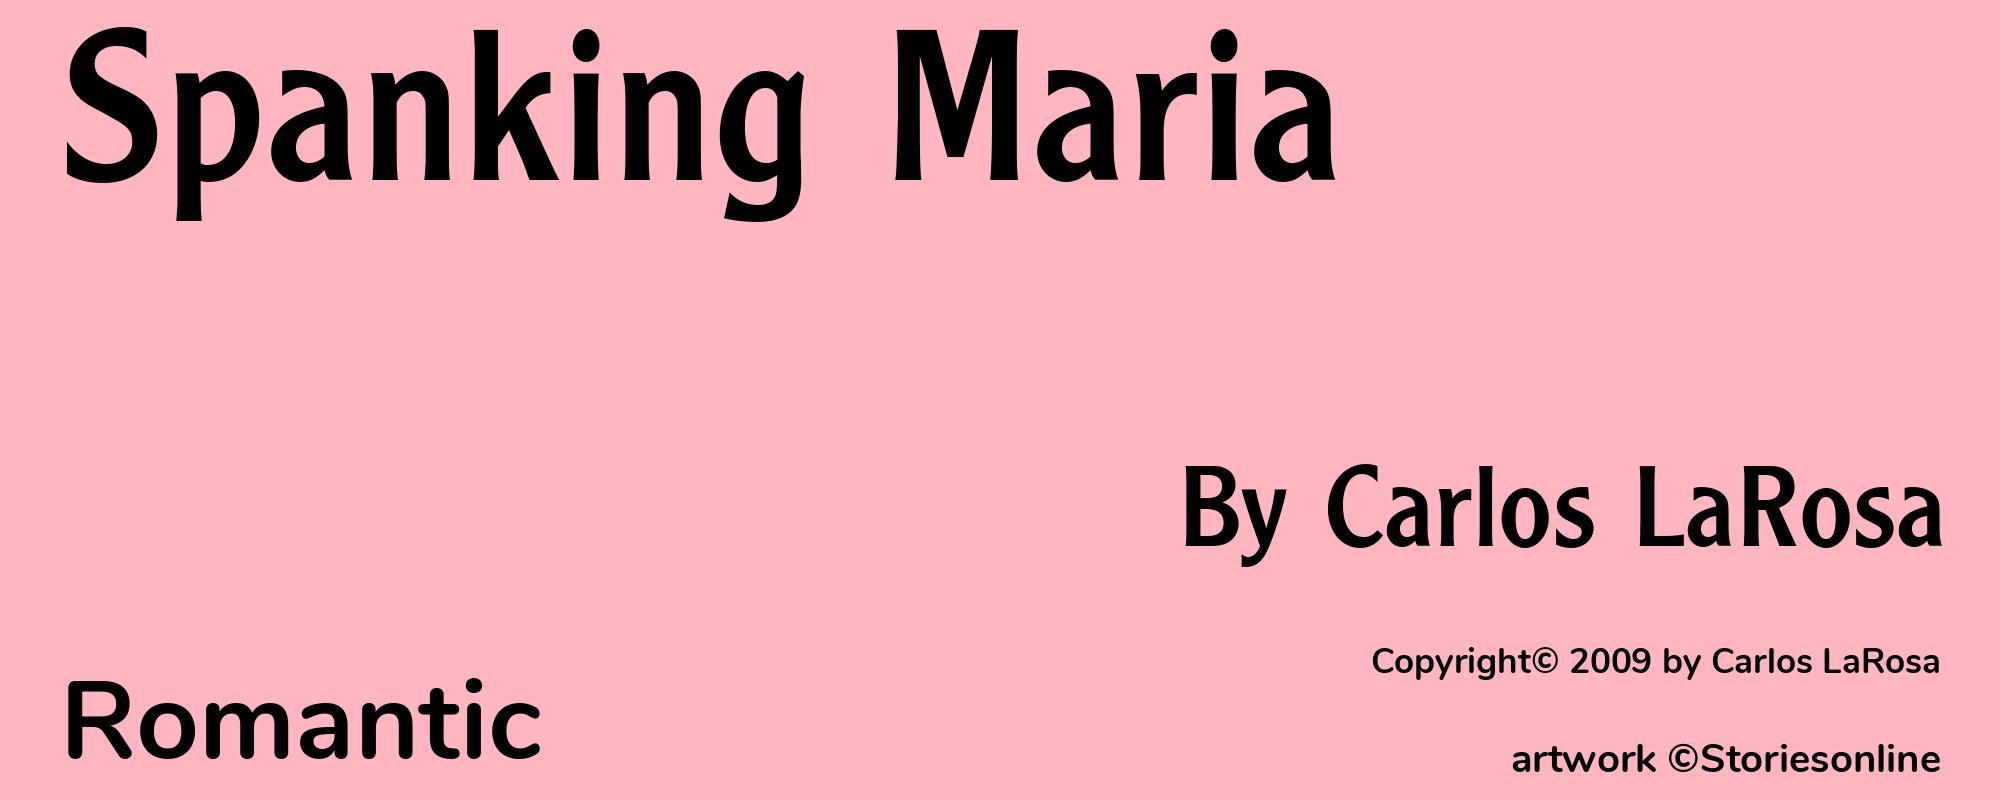 Spanking Maria - Cover